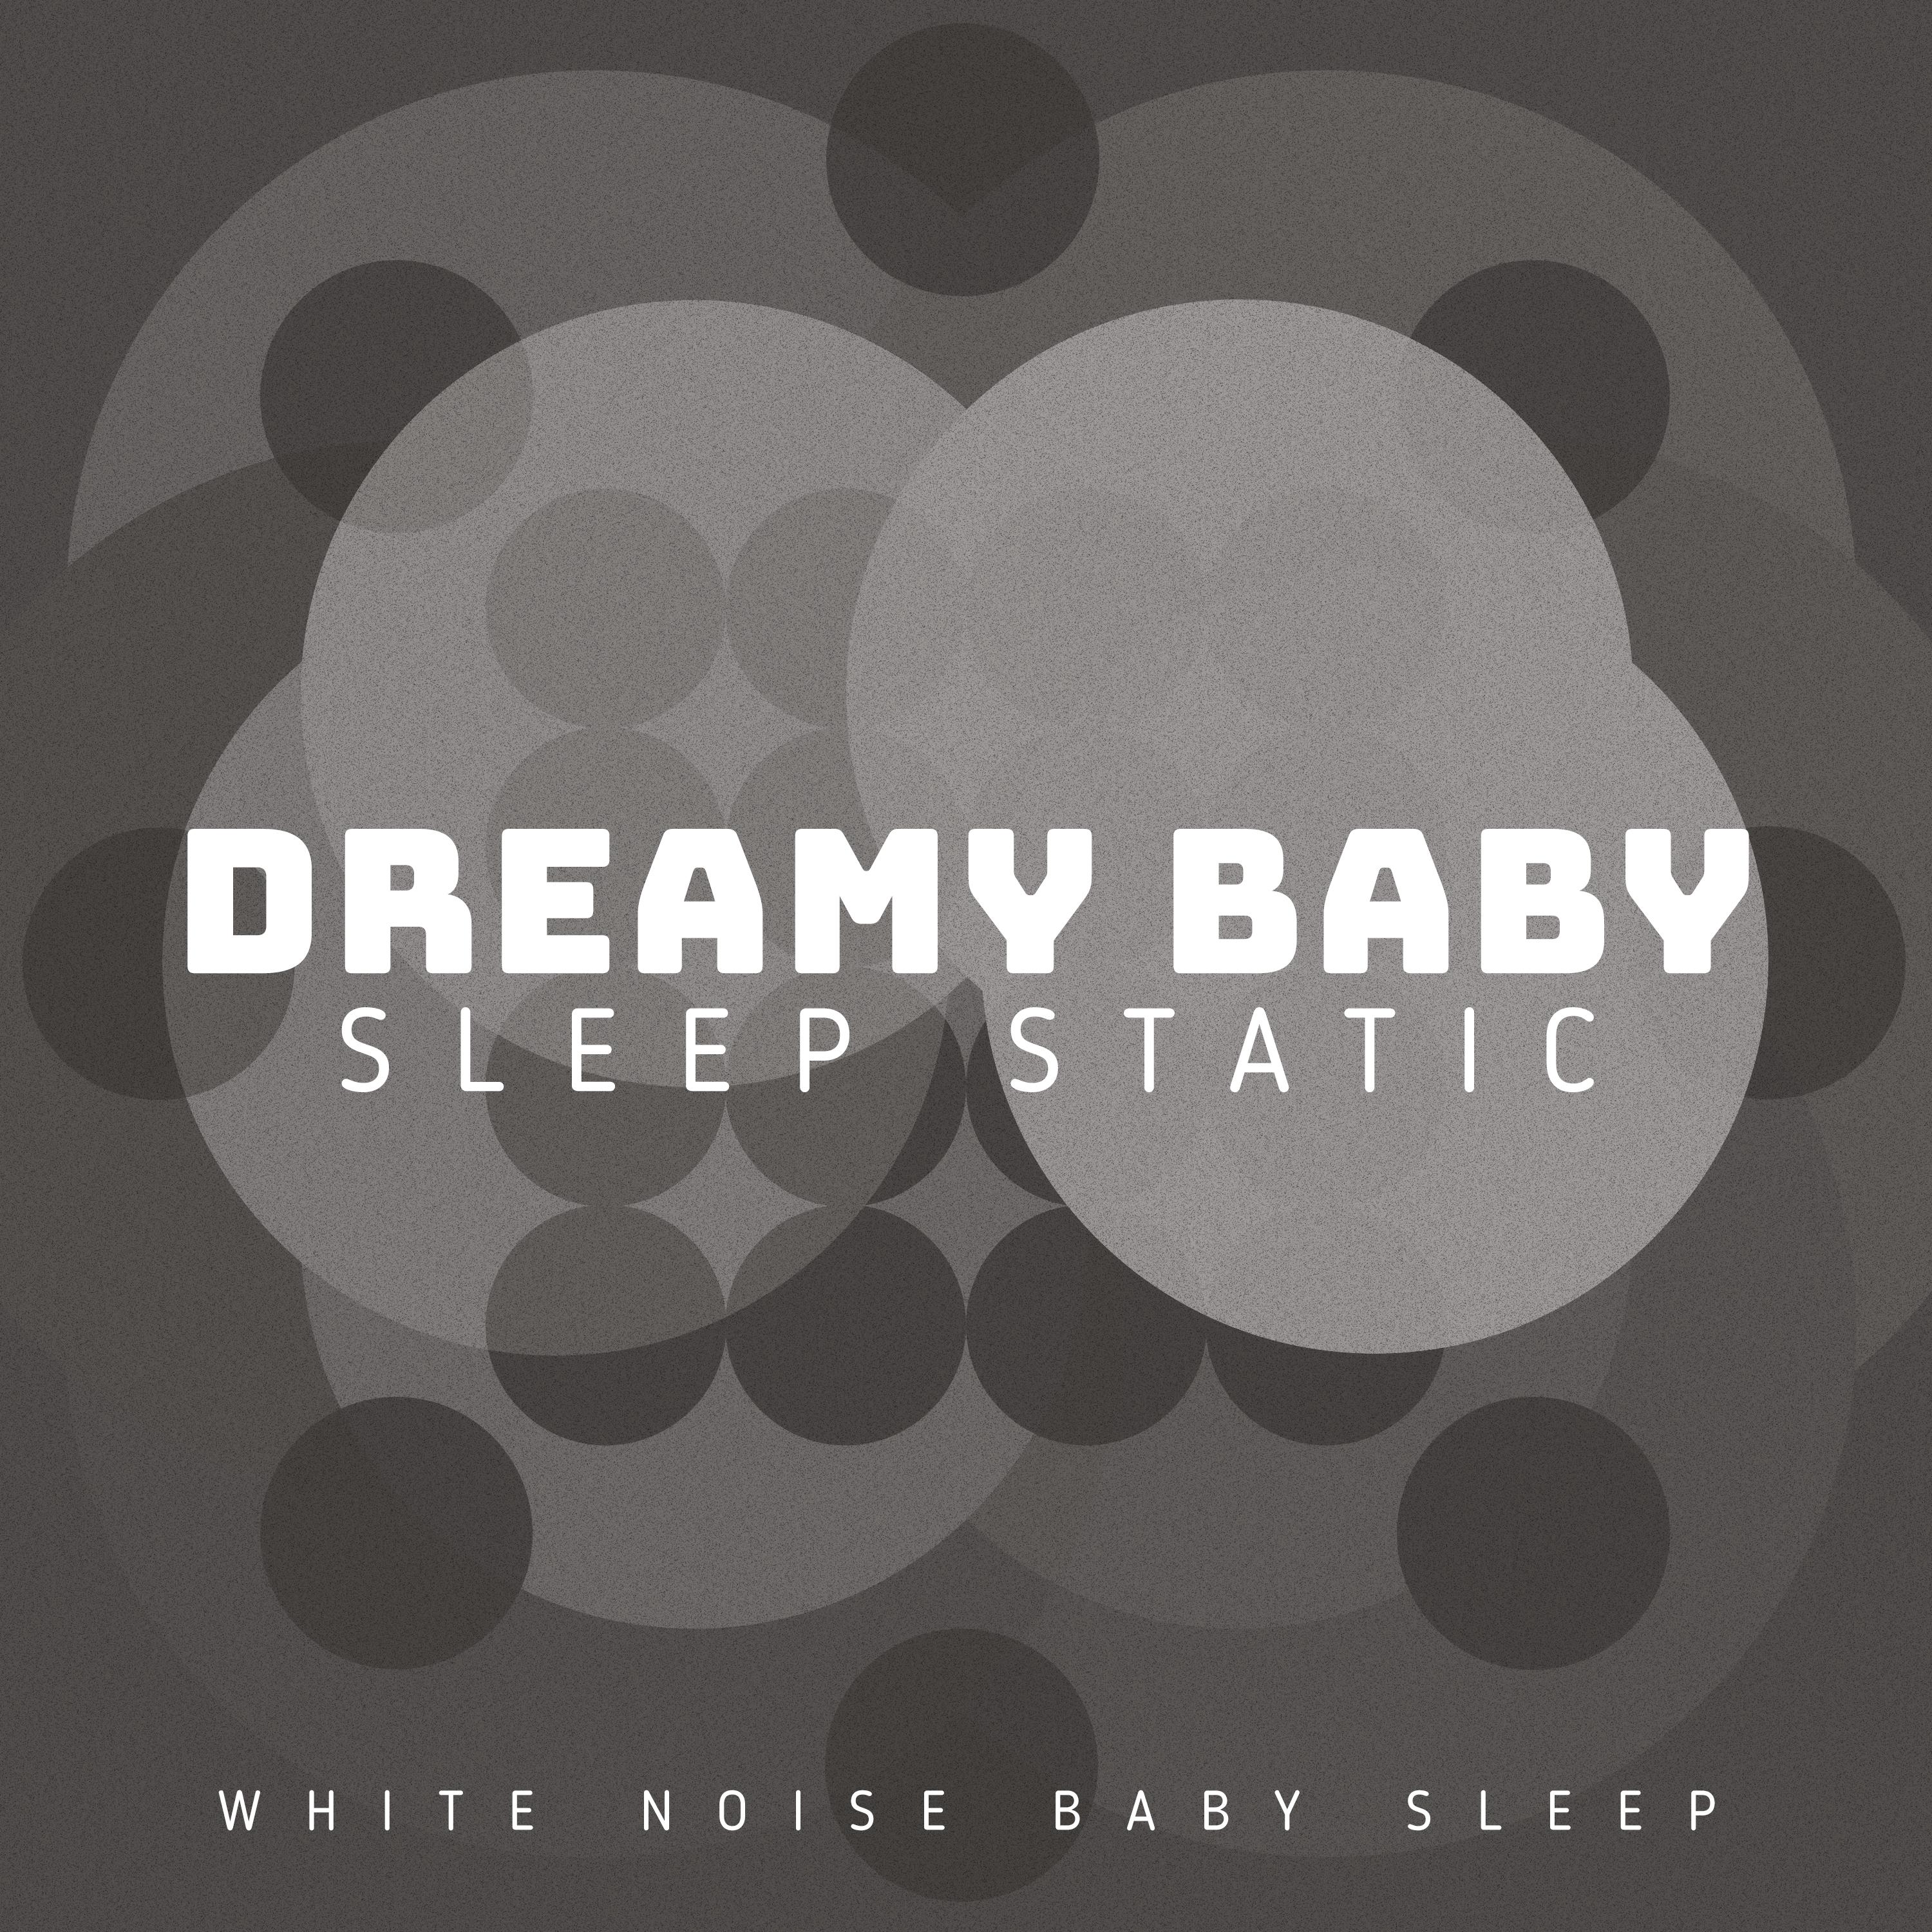 Dreamy Baby Sleep Static